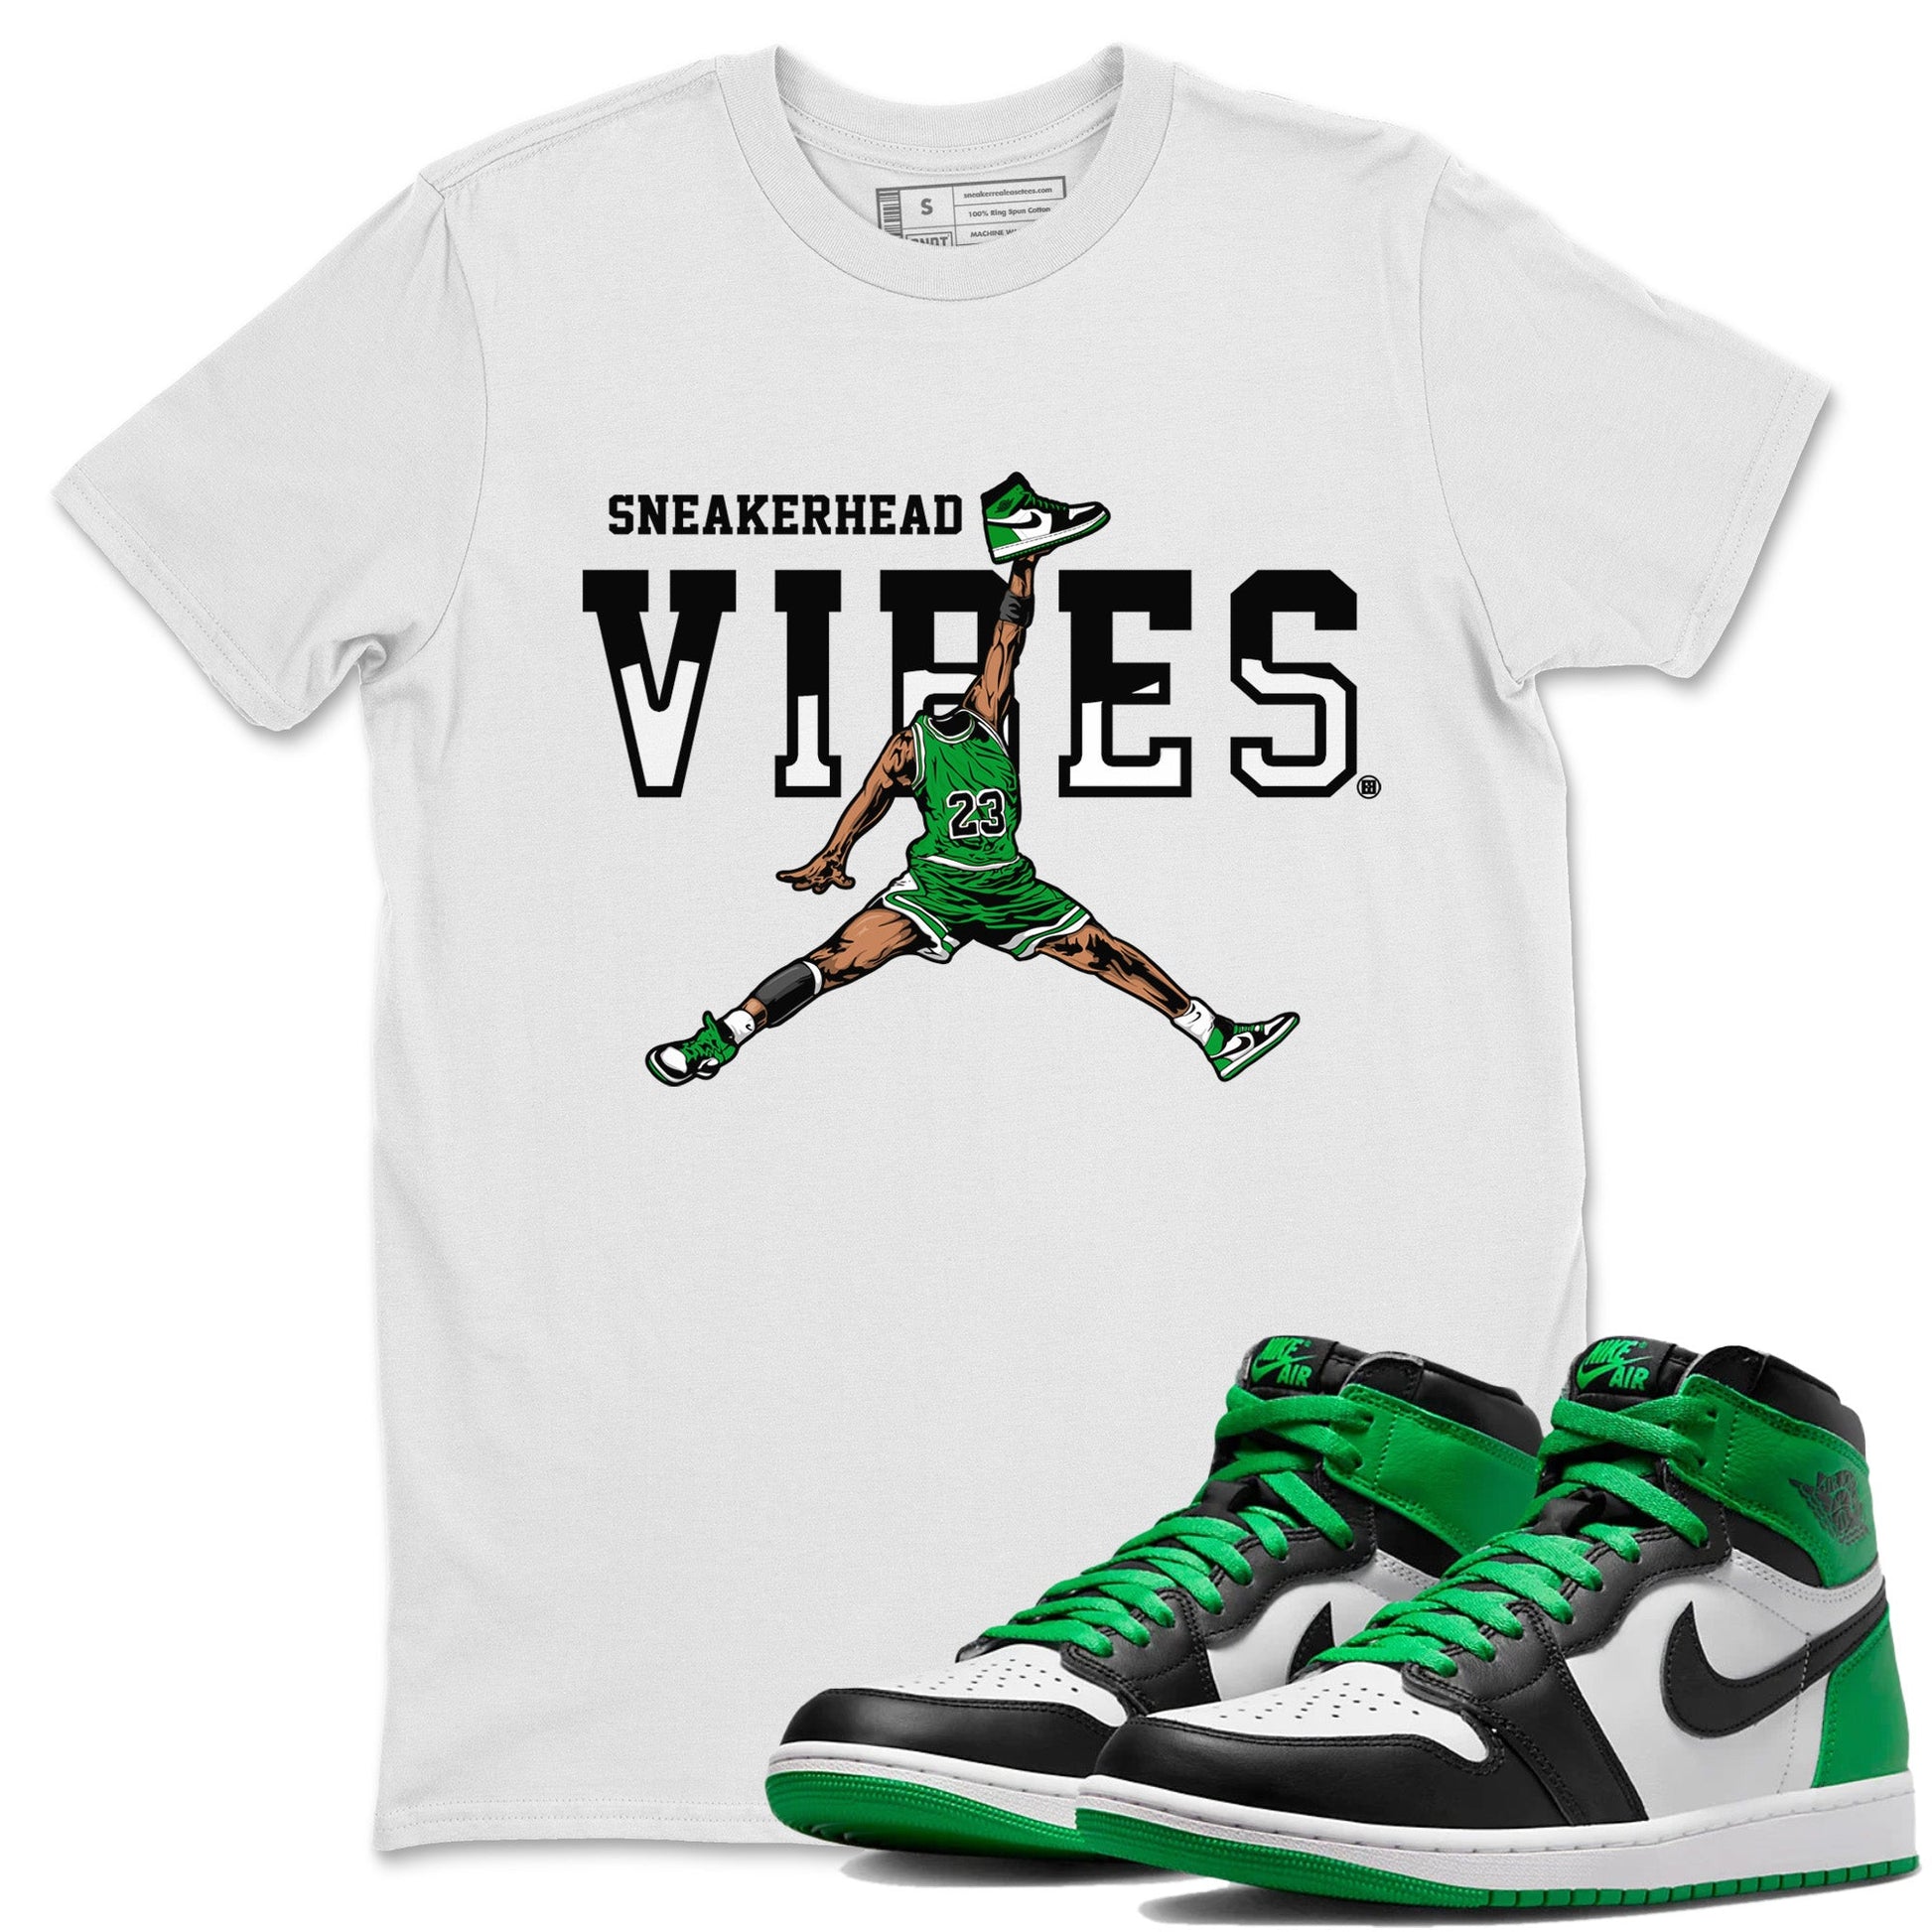 Air Jordan 1 Celtics Sneaker Match Tees Sneakerhead Vibes Sneaker Tees Air Jordan 1 Retro Celtics Sneaker Release Tees Unisex Shirts White 1